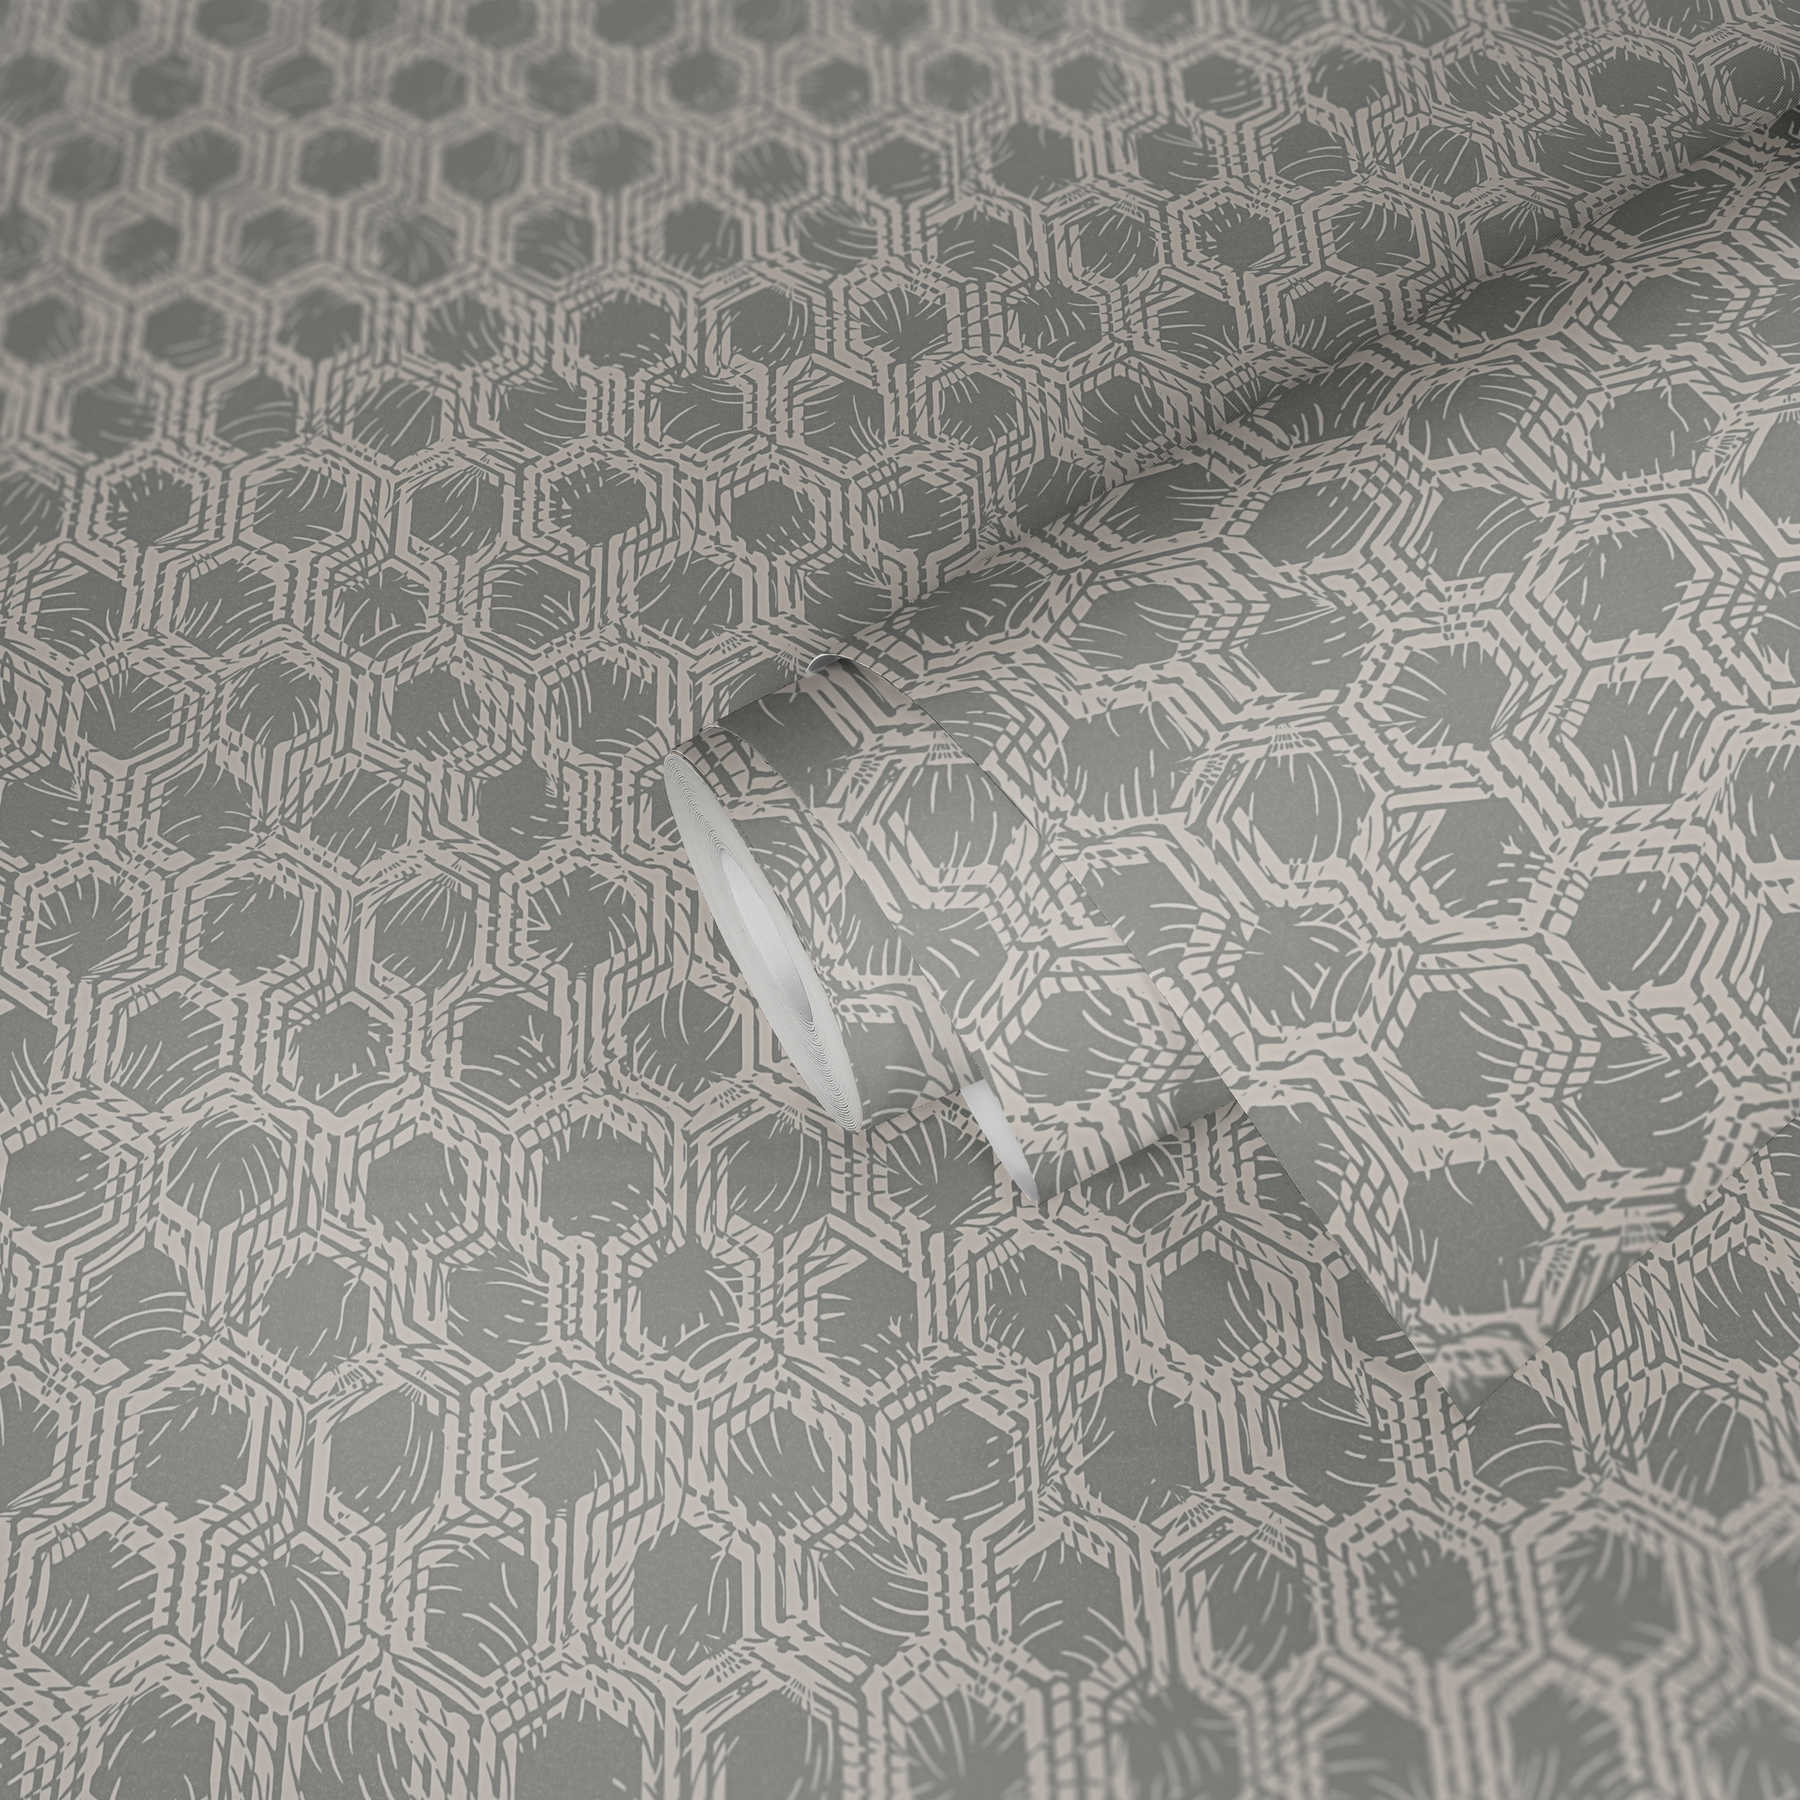             Geometric pattern wallpaper with metallic colours - beige, metallic
        